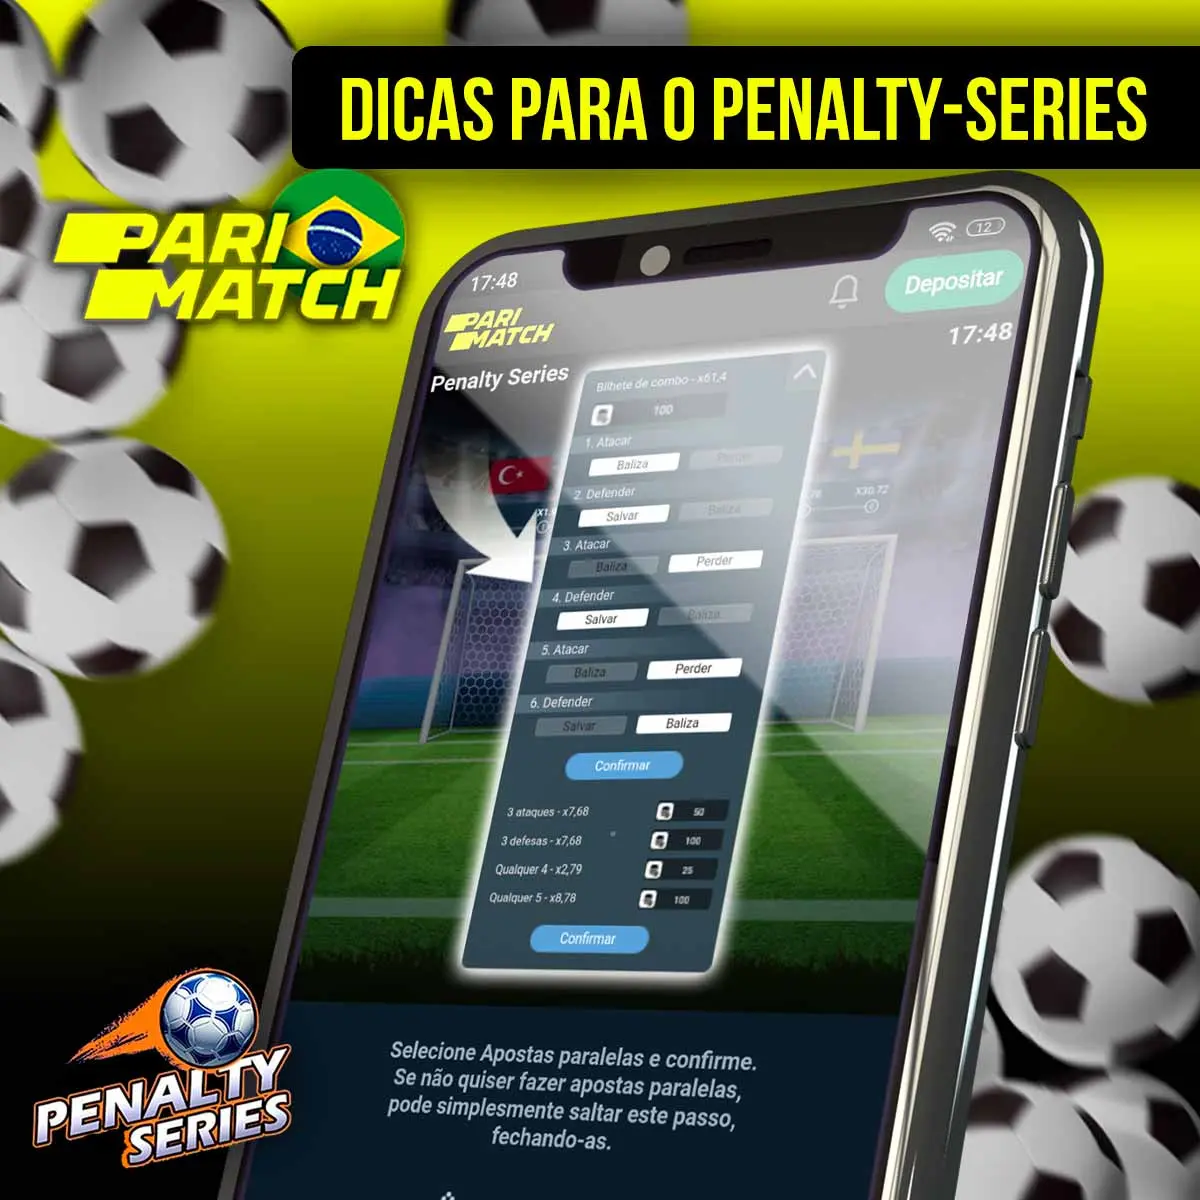 Recomendações para jogar Penalty-Series Parimatch